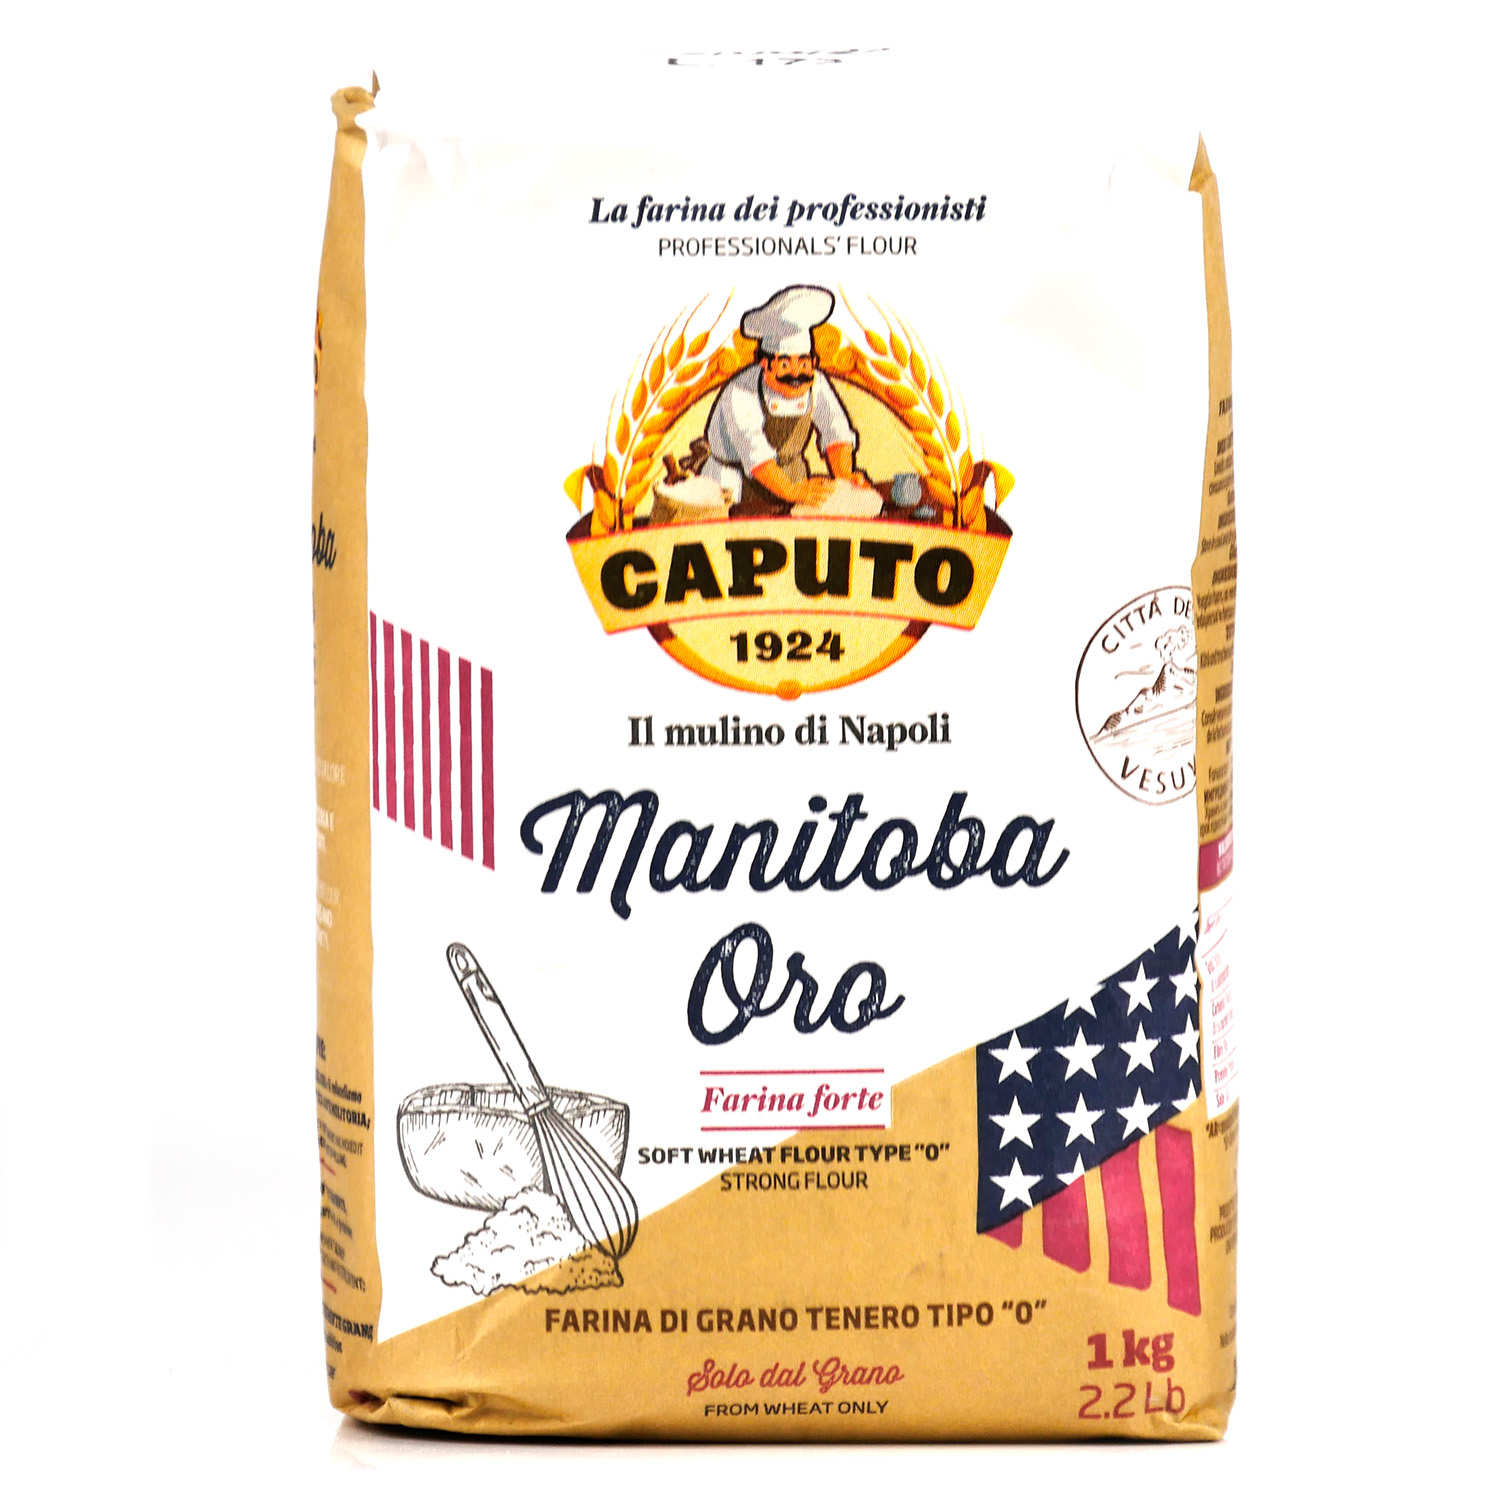 Manitoba graine de Chia sac de graines 1kg - Animosfery